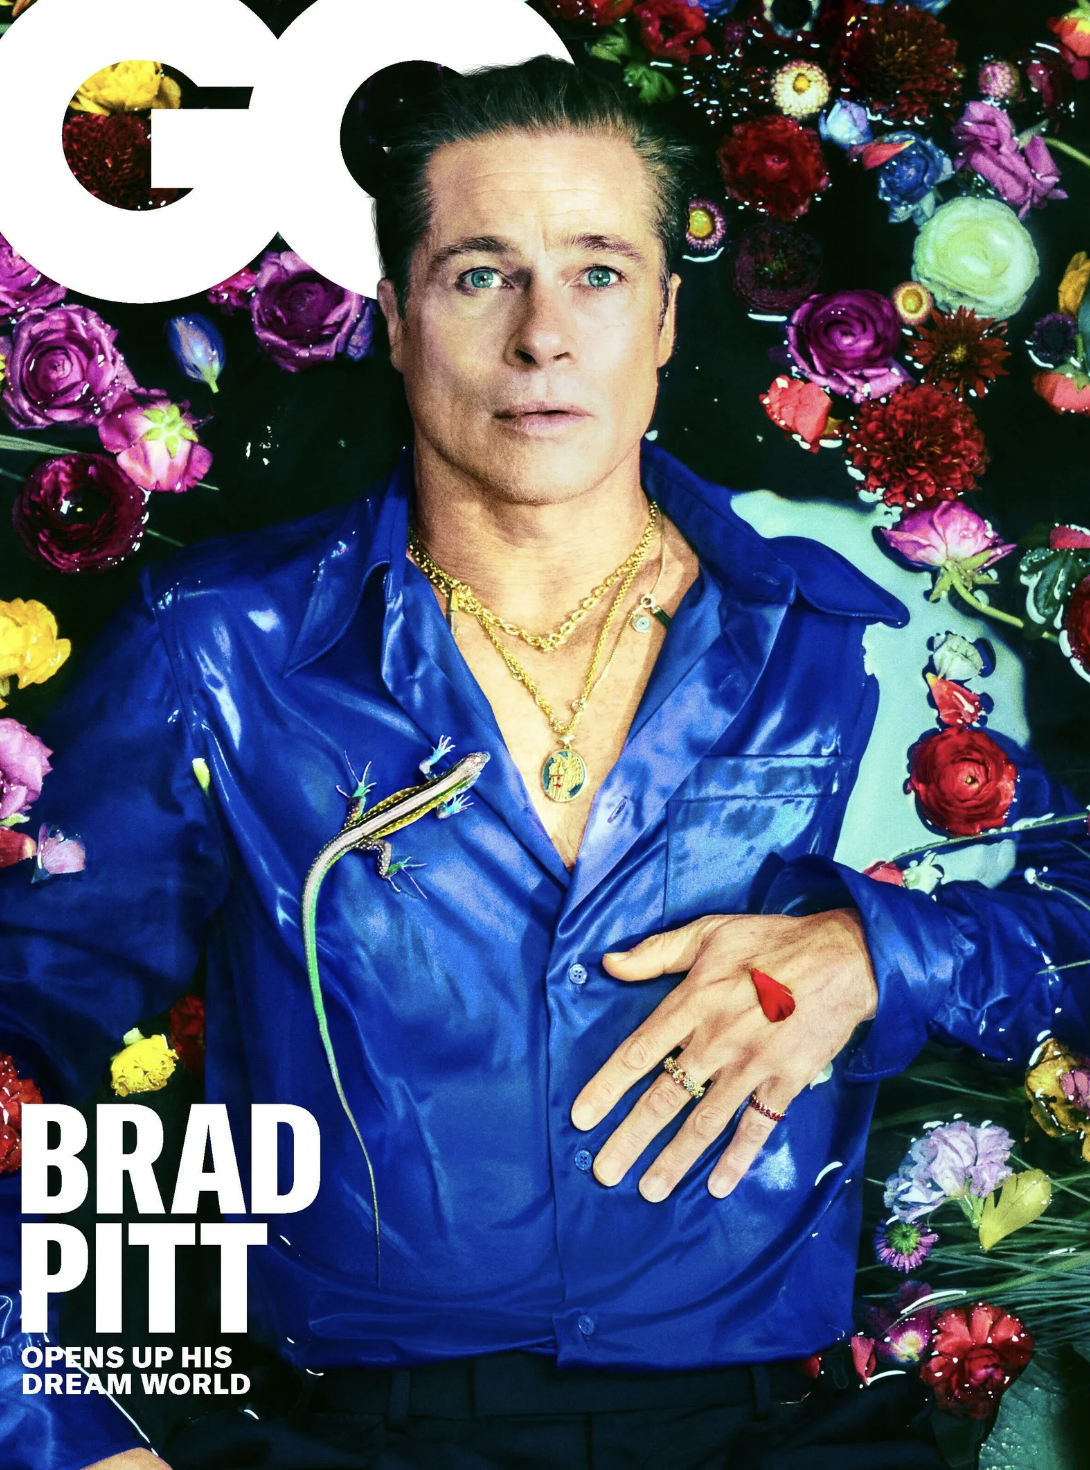 brad pitt gq cover - Brad Pitt Opens Up His Dream World